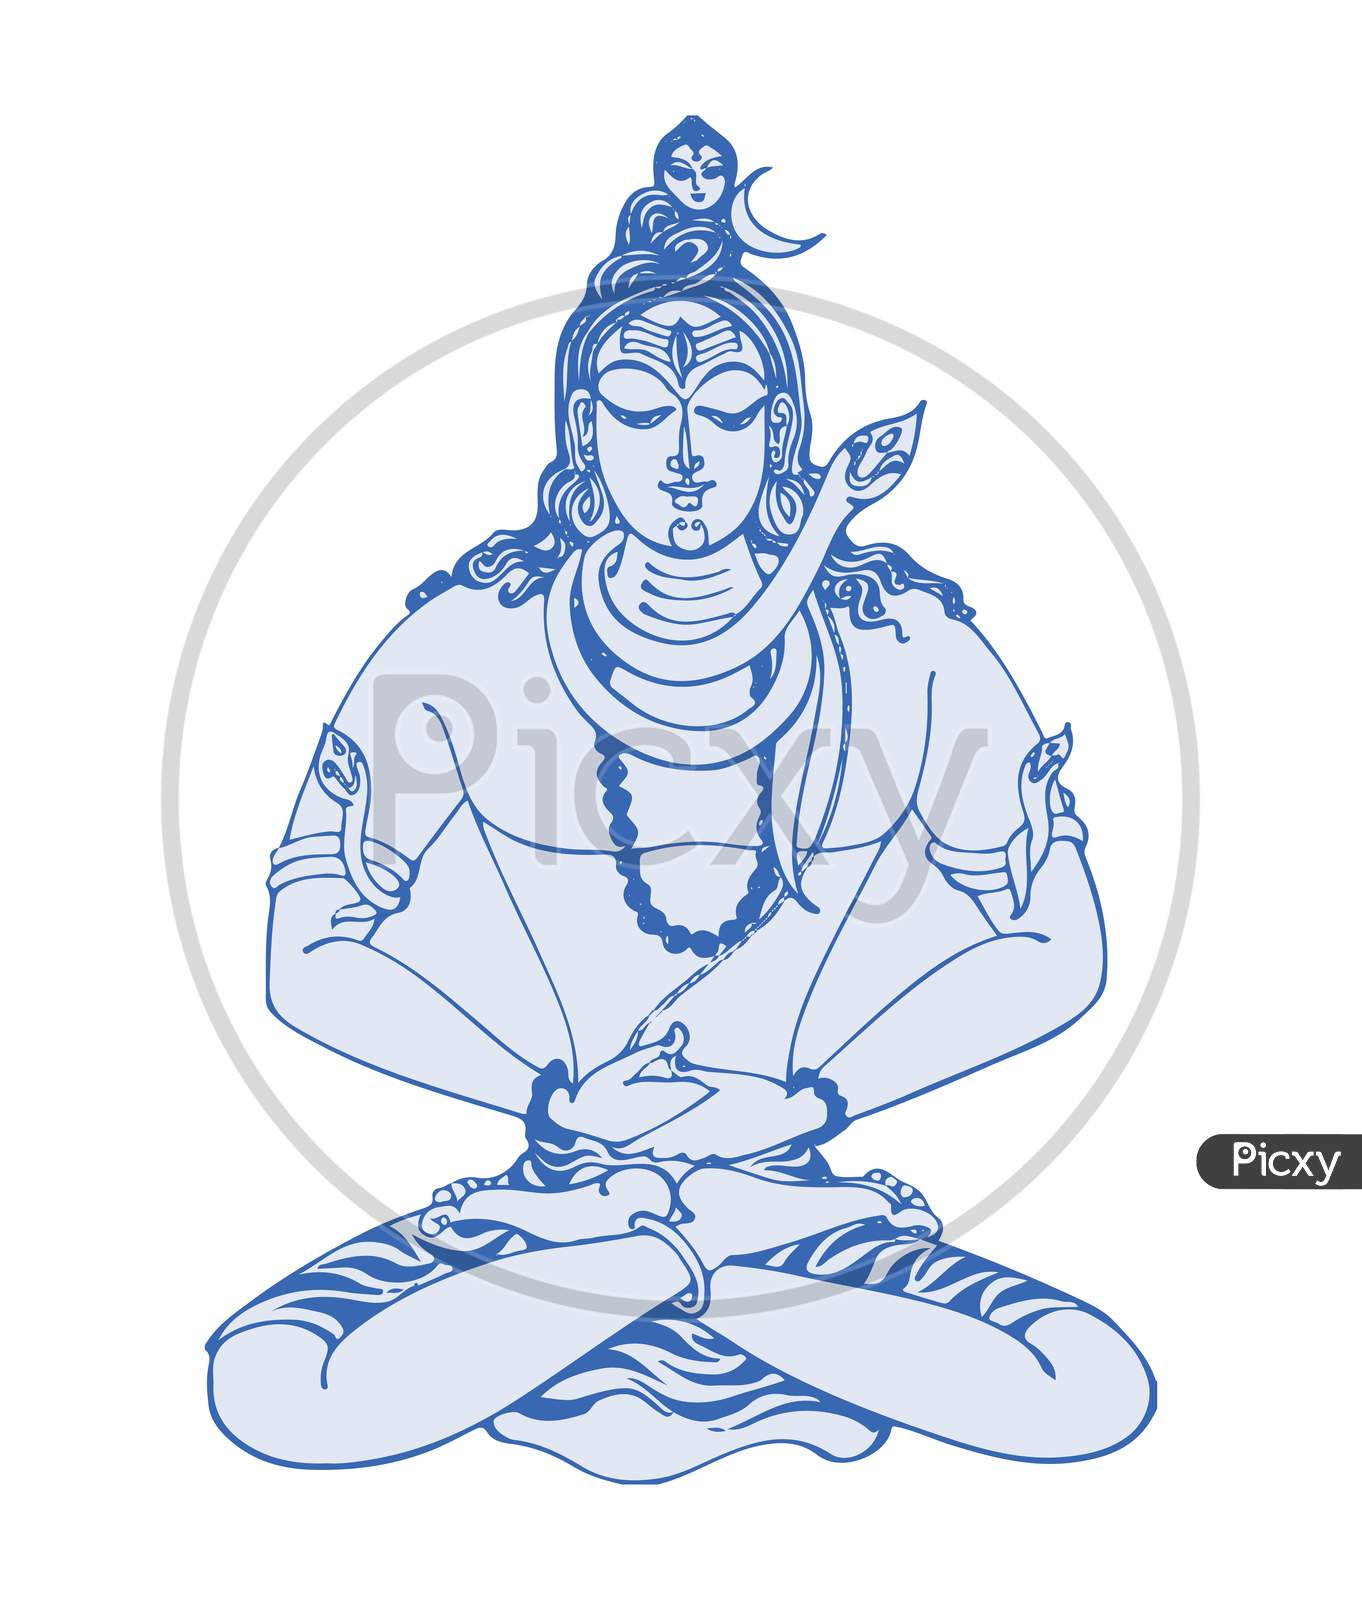 Lord Shiva meditating soft and peaceful face shining image generative AI  22692119 Stock Photo at Vecteezy